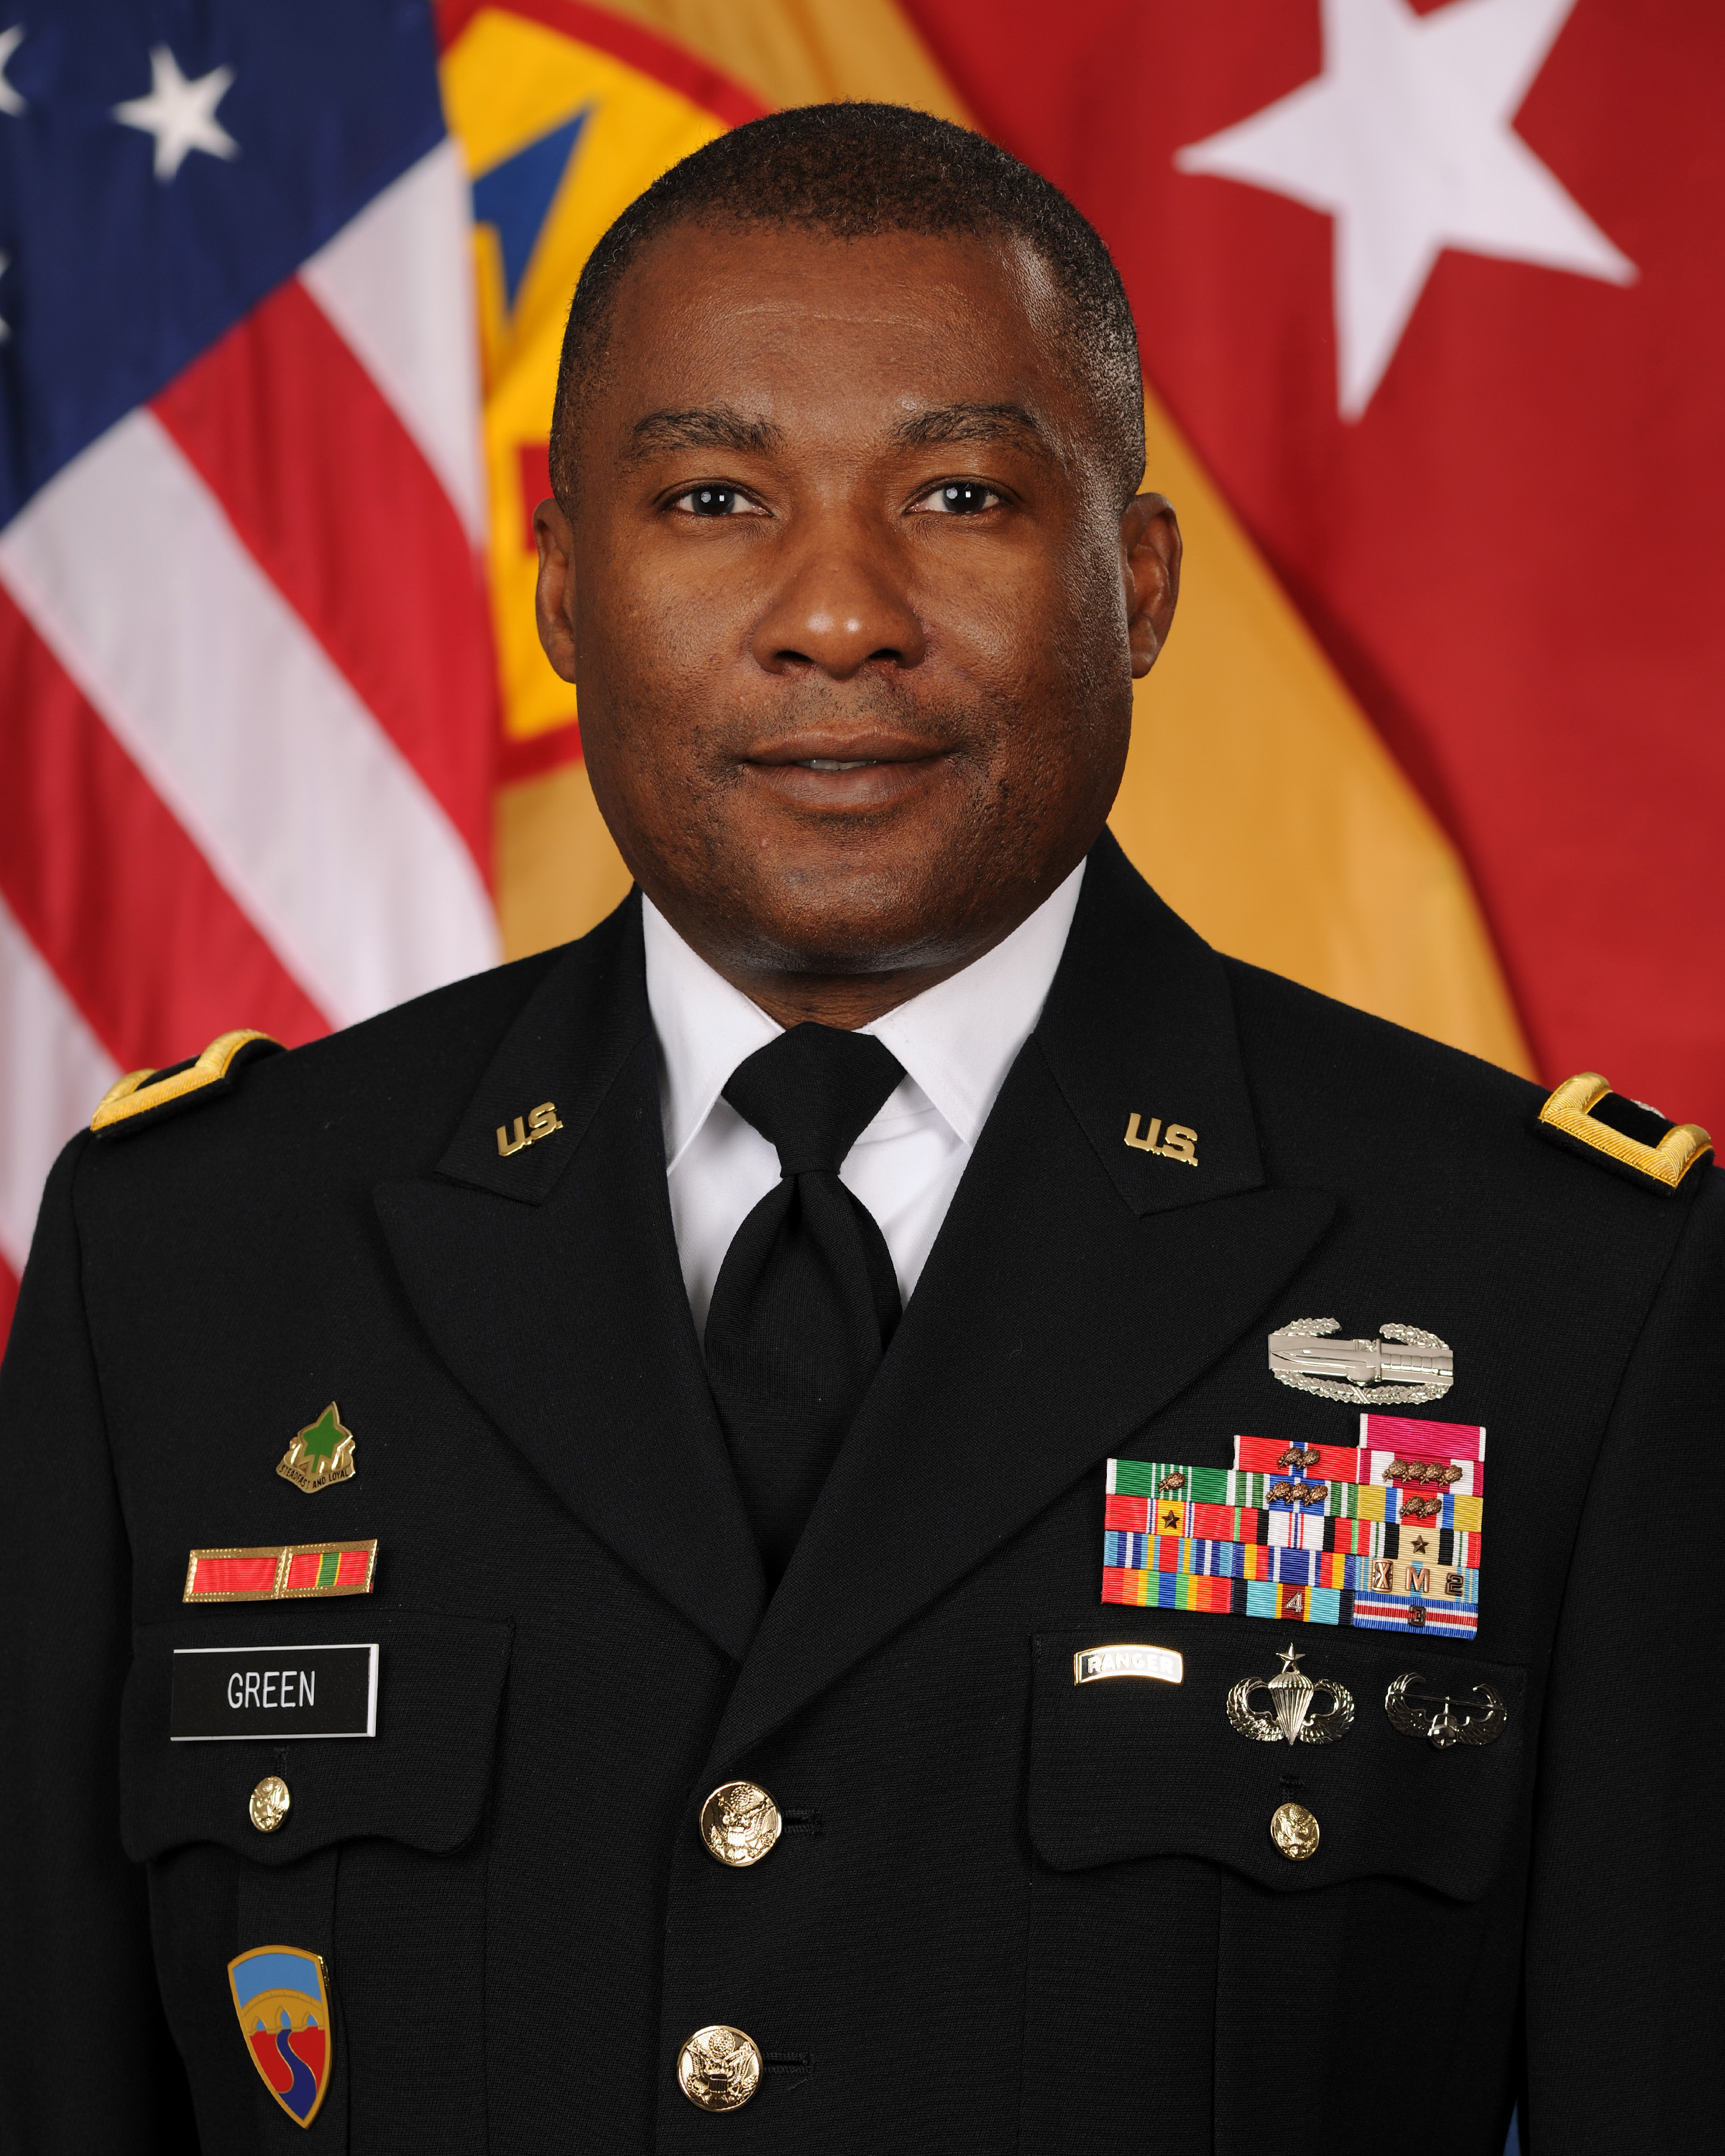 Brigadier General Pin. General green